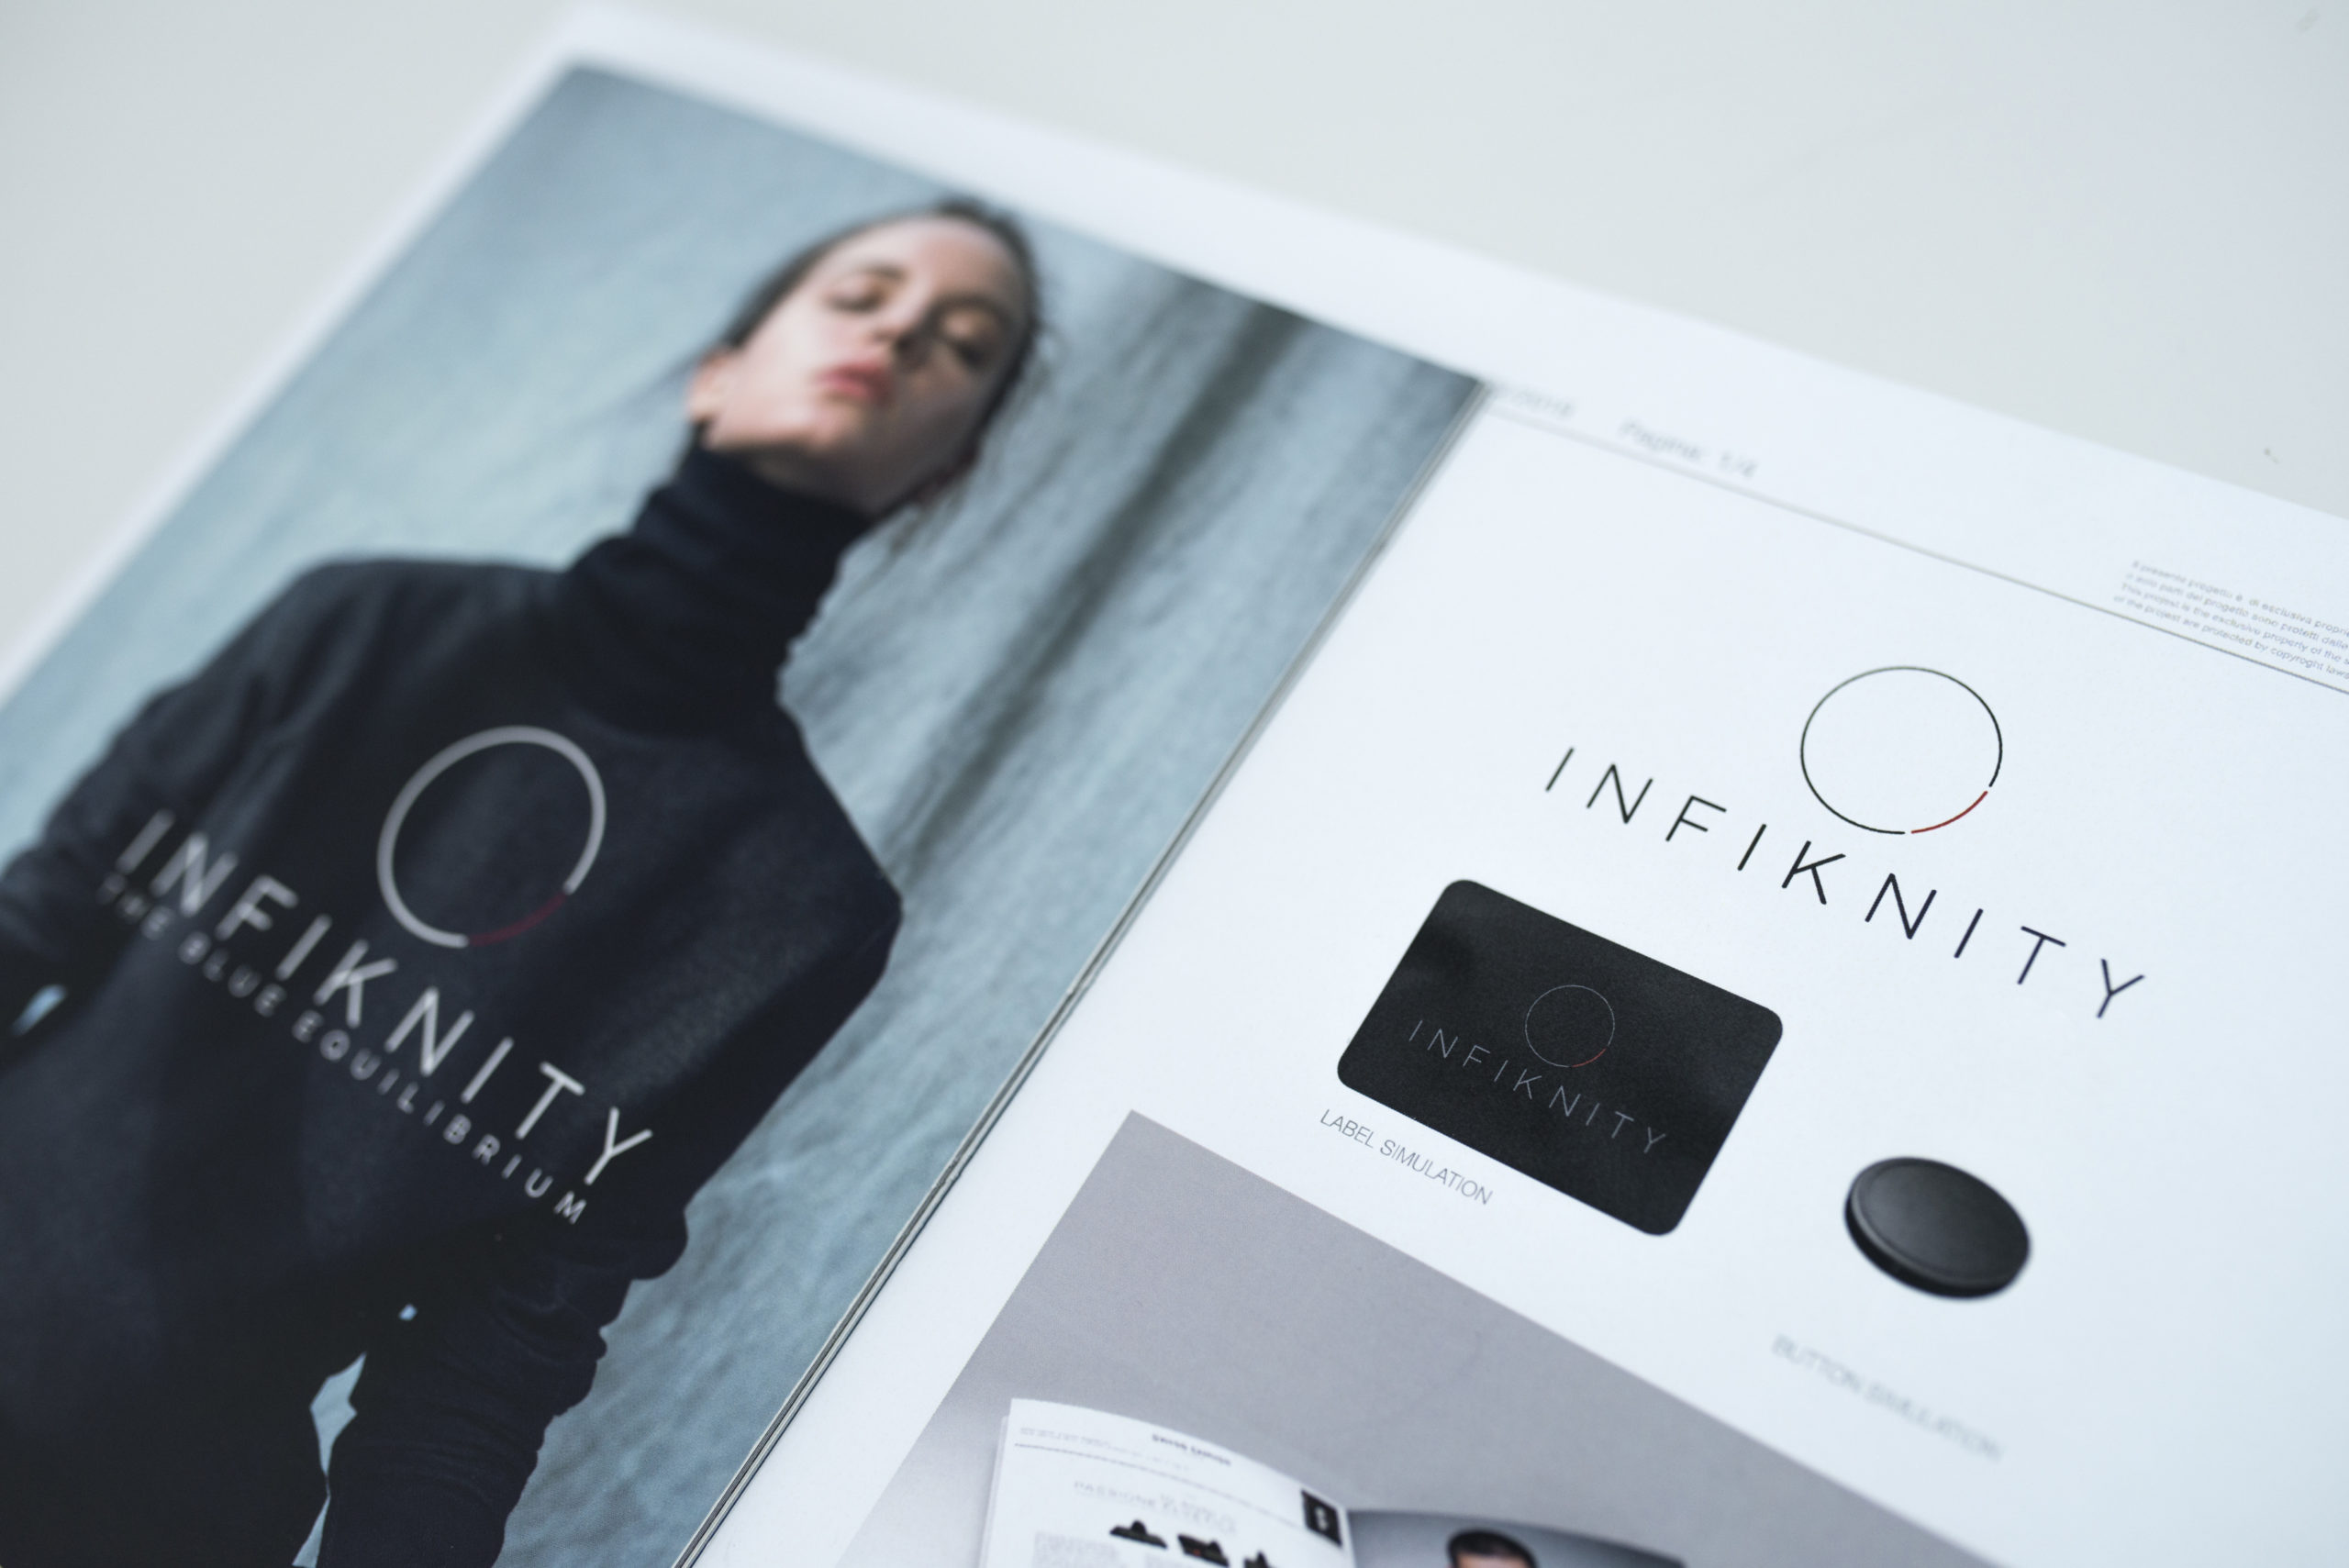 Infiknity catalogue and logo - Arvind indigo knitwear